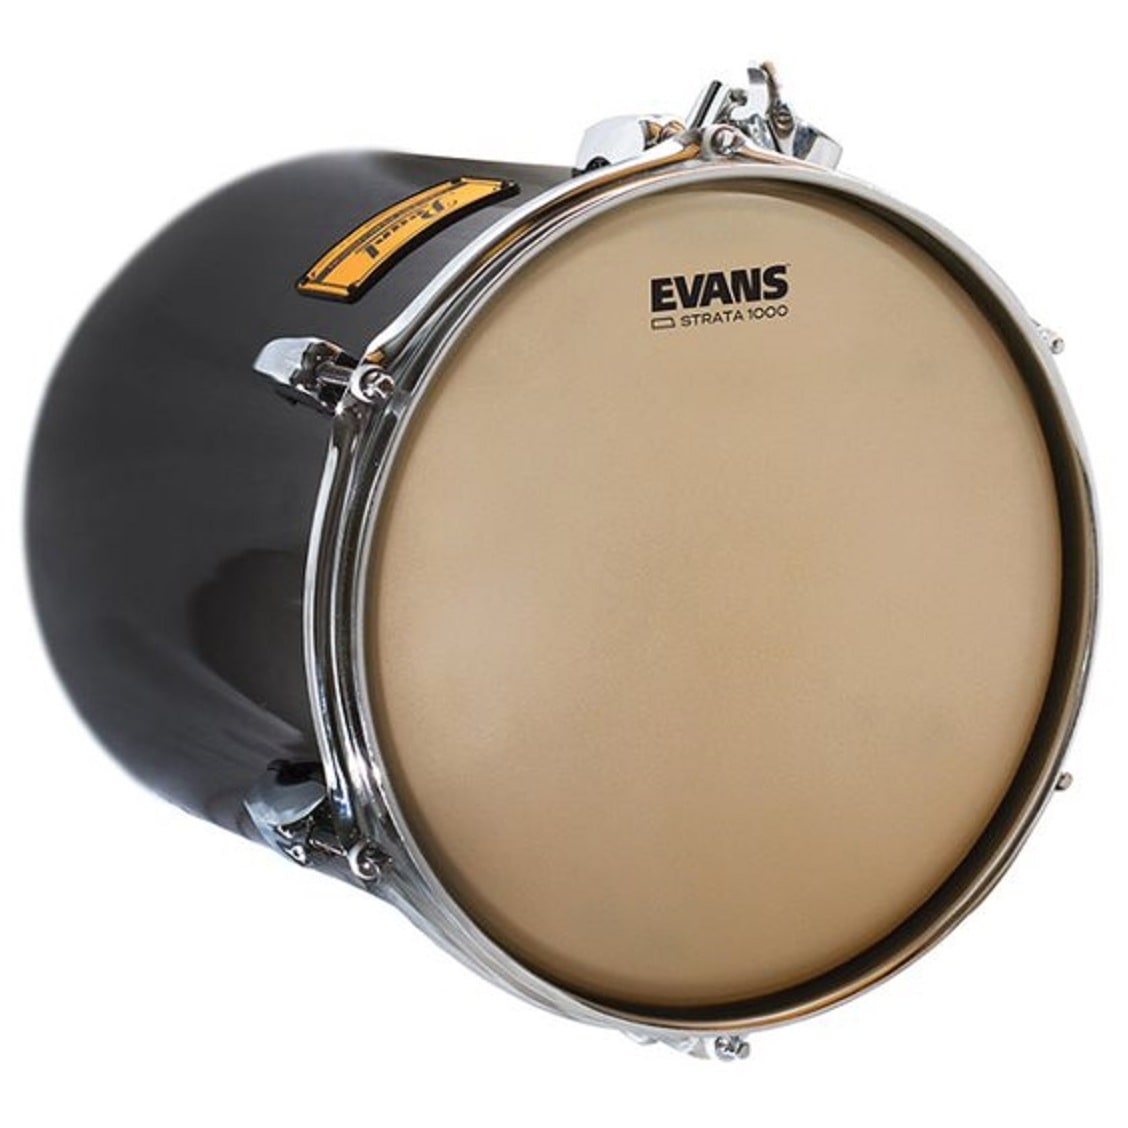 Evans CT13S - Strata 1000 Concert Drum Head, 13 Zoll 1